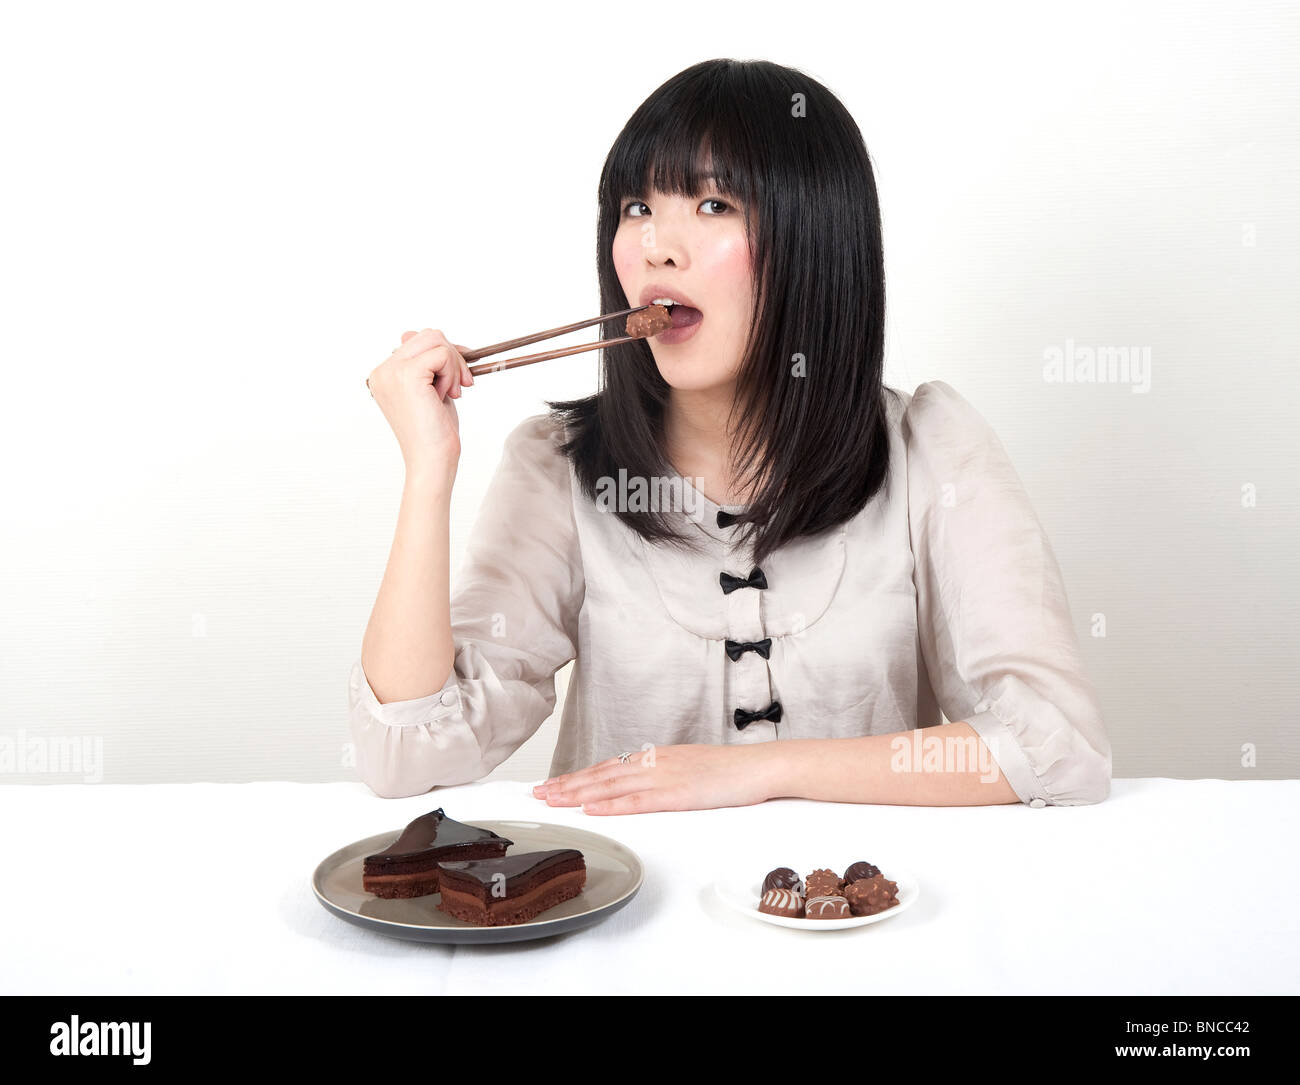 young japanese girl eating chocolate Stock Photo